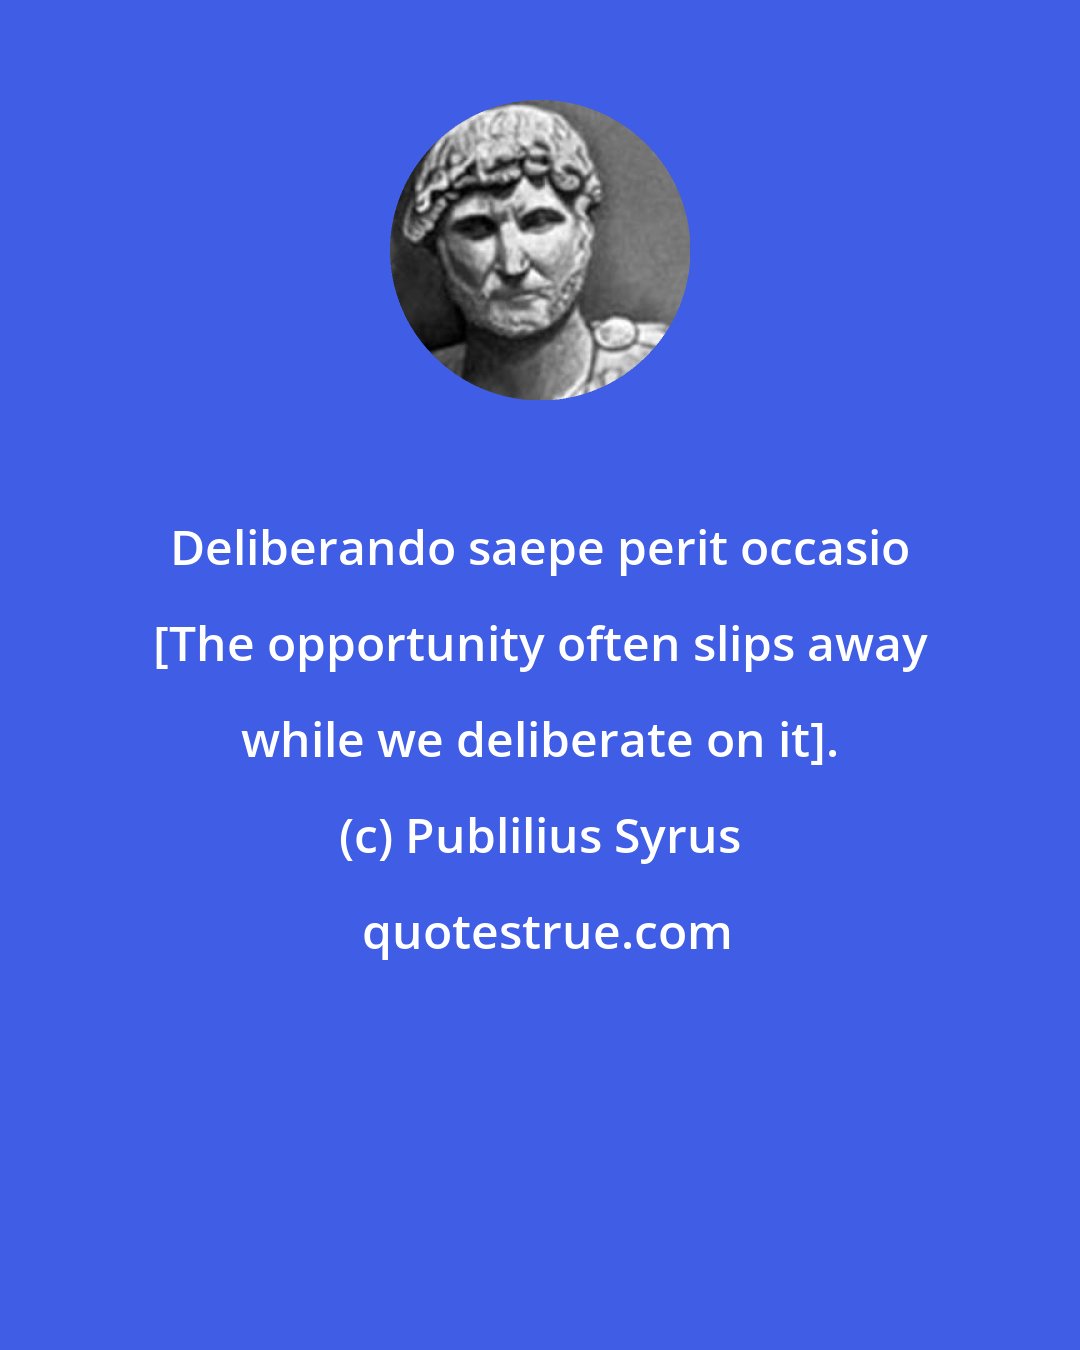 Publilius Syrus: Deliberando saepe perit occasio [The opportunity often slips away while we deliberate on it].